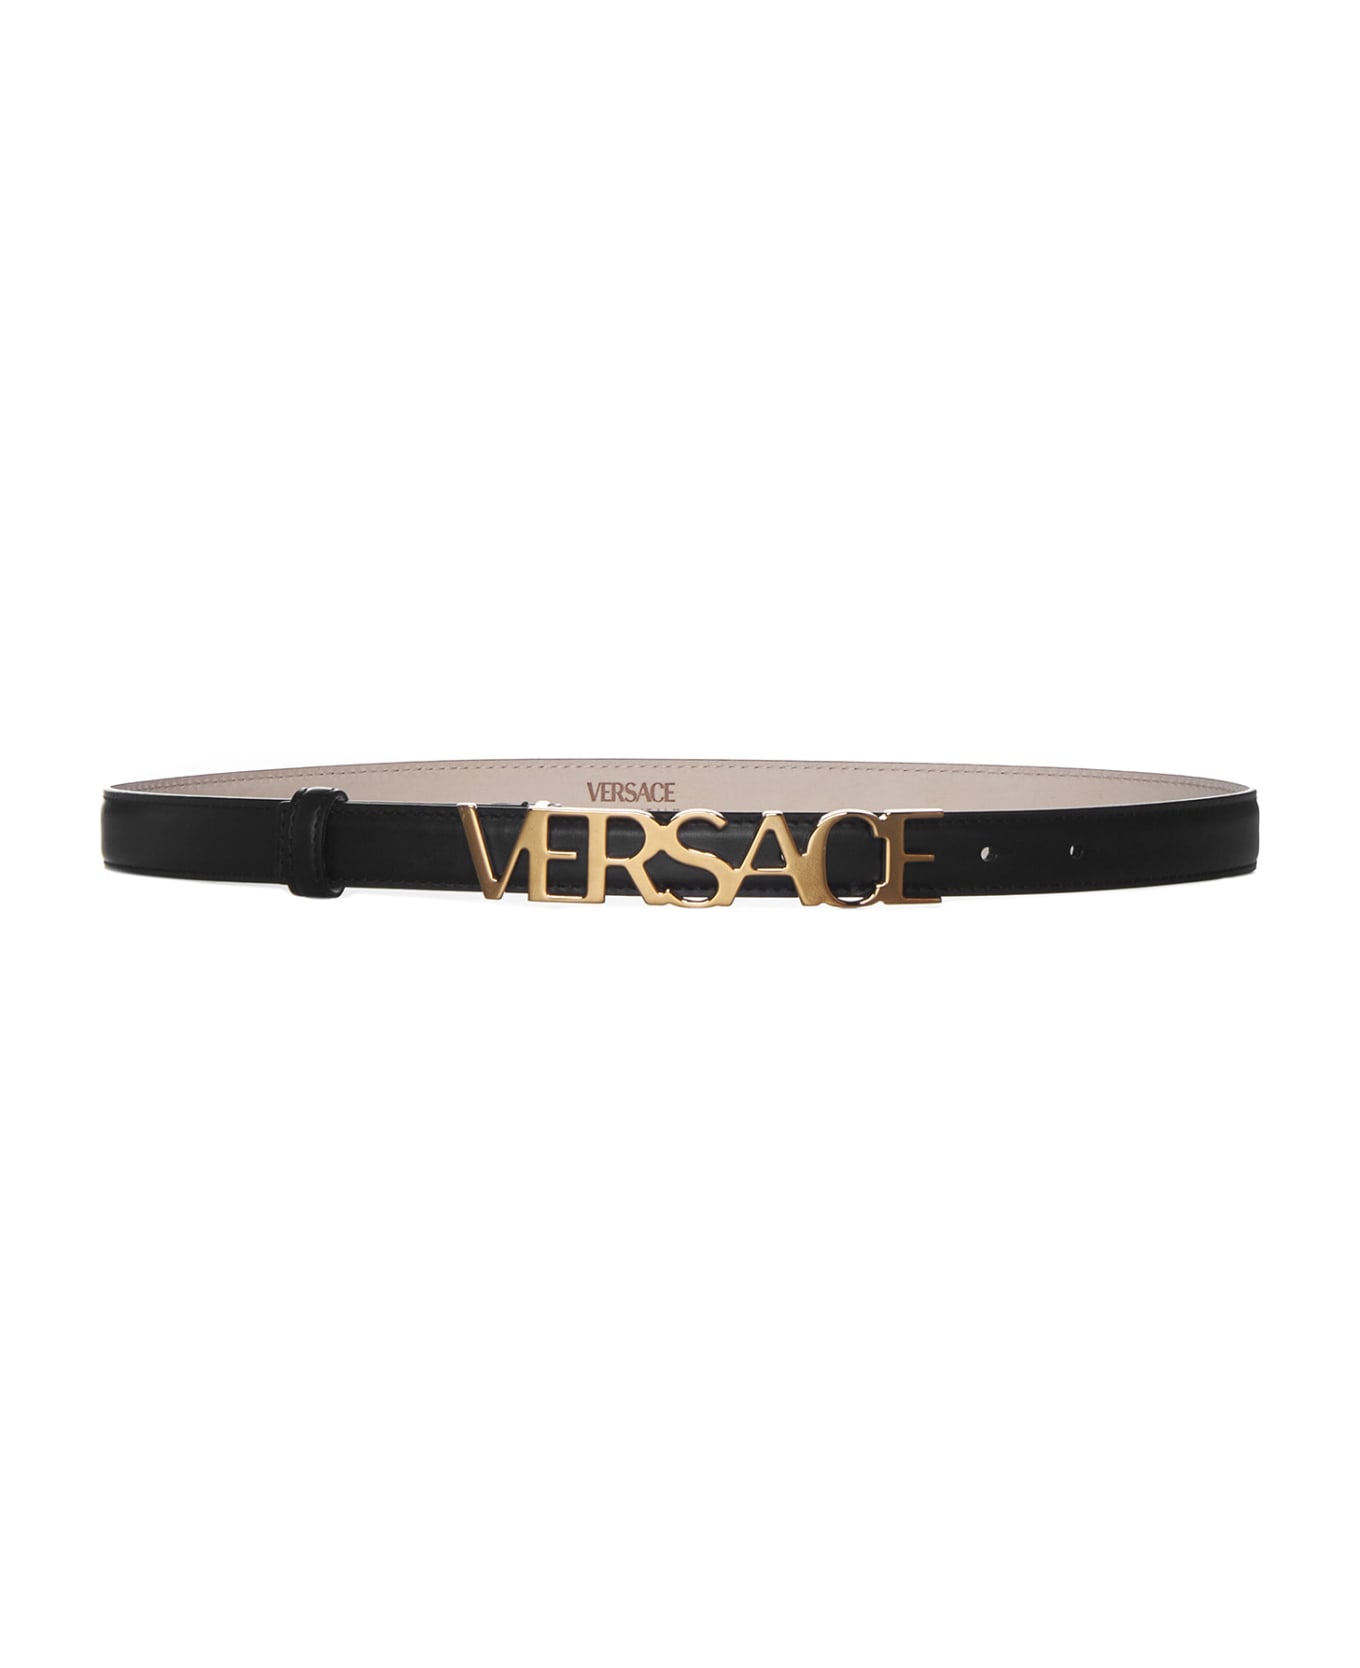 Versace Belt - Nero oro versace